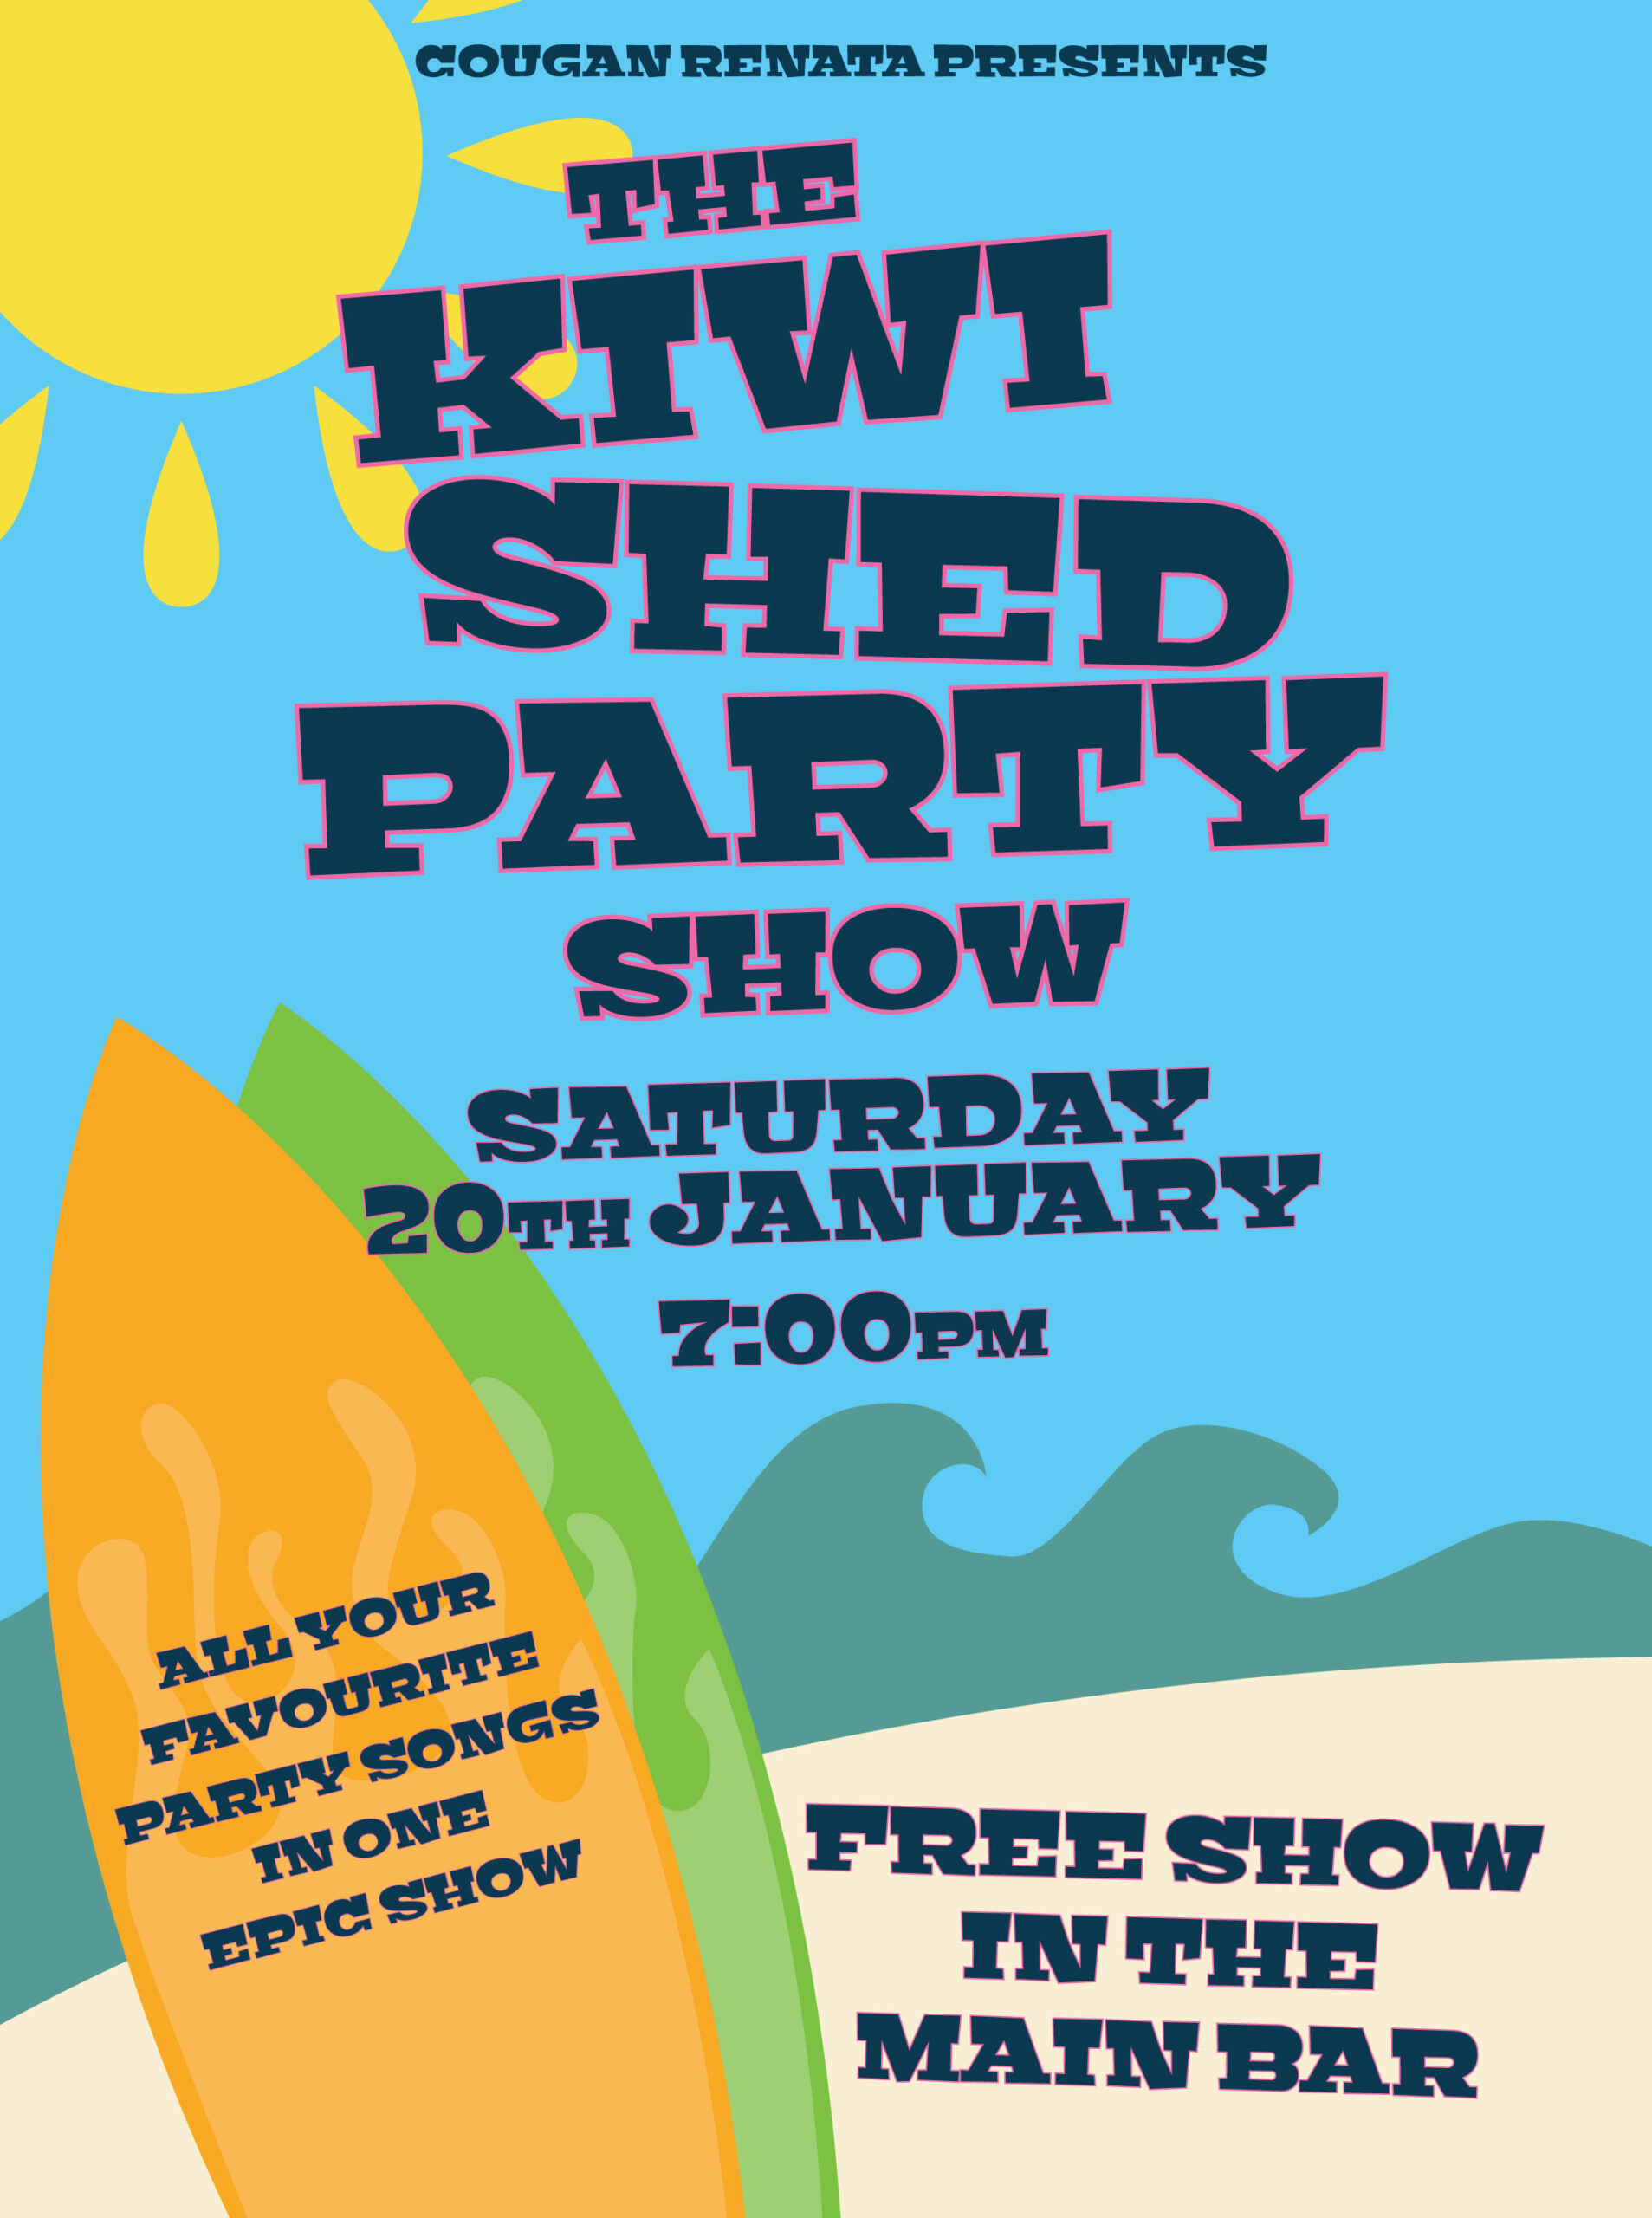 Kiwi Shed Party